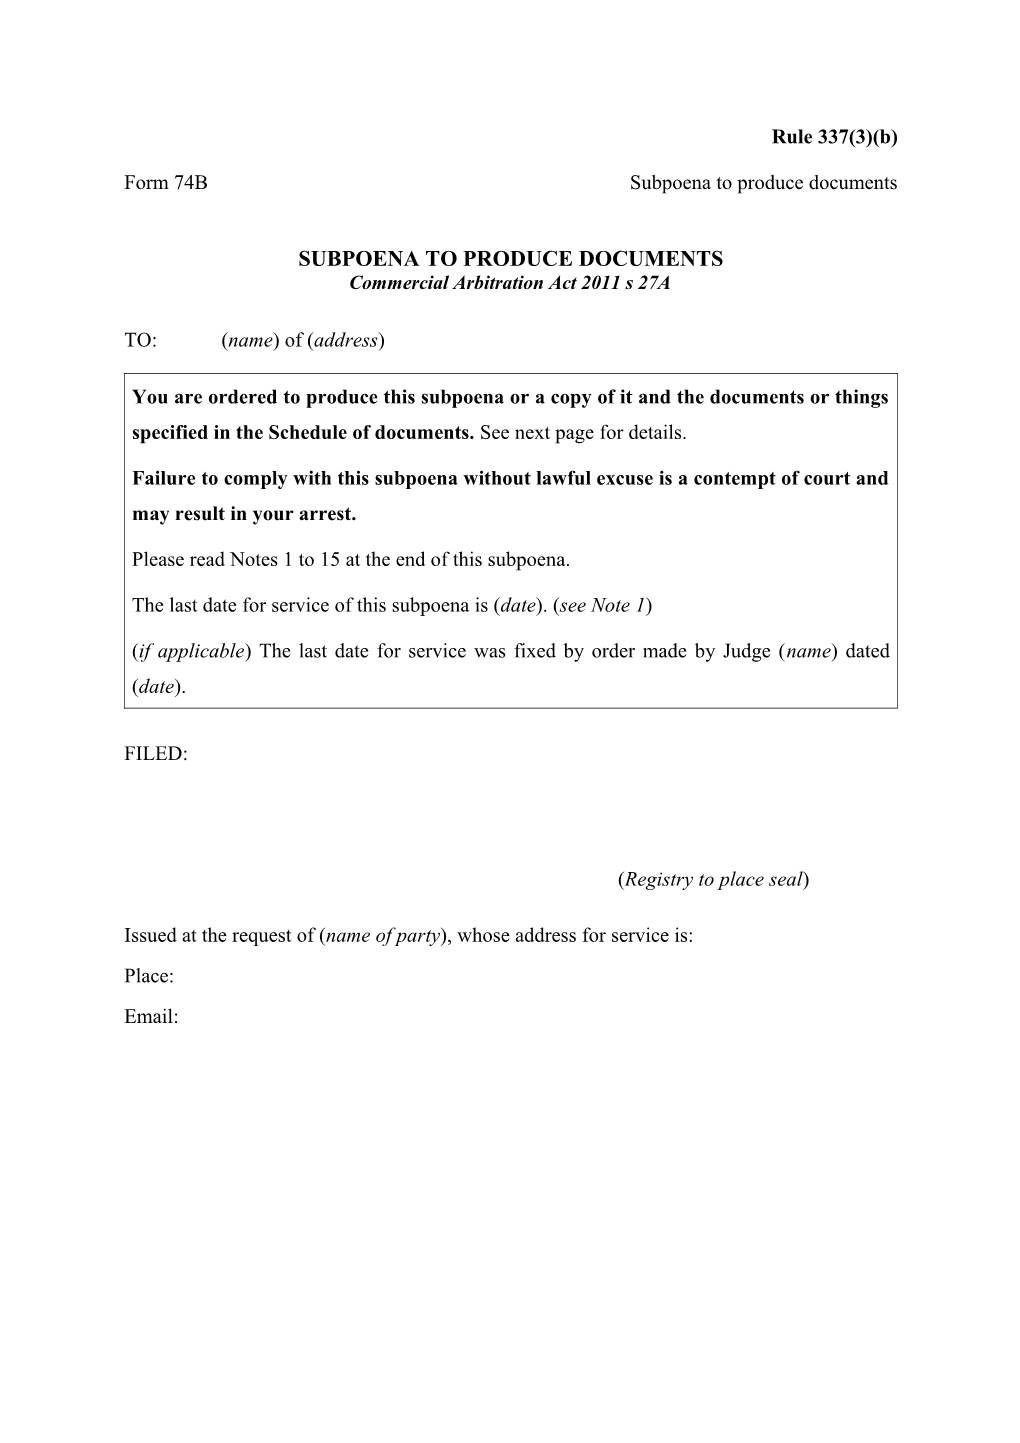 Form 74B - Subpoena to Produce Documents